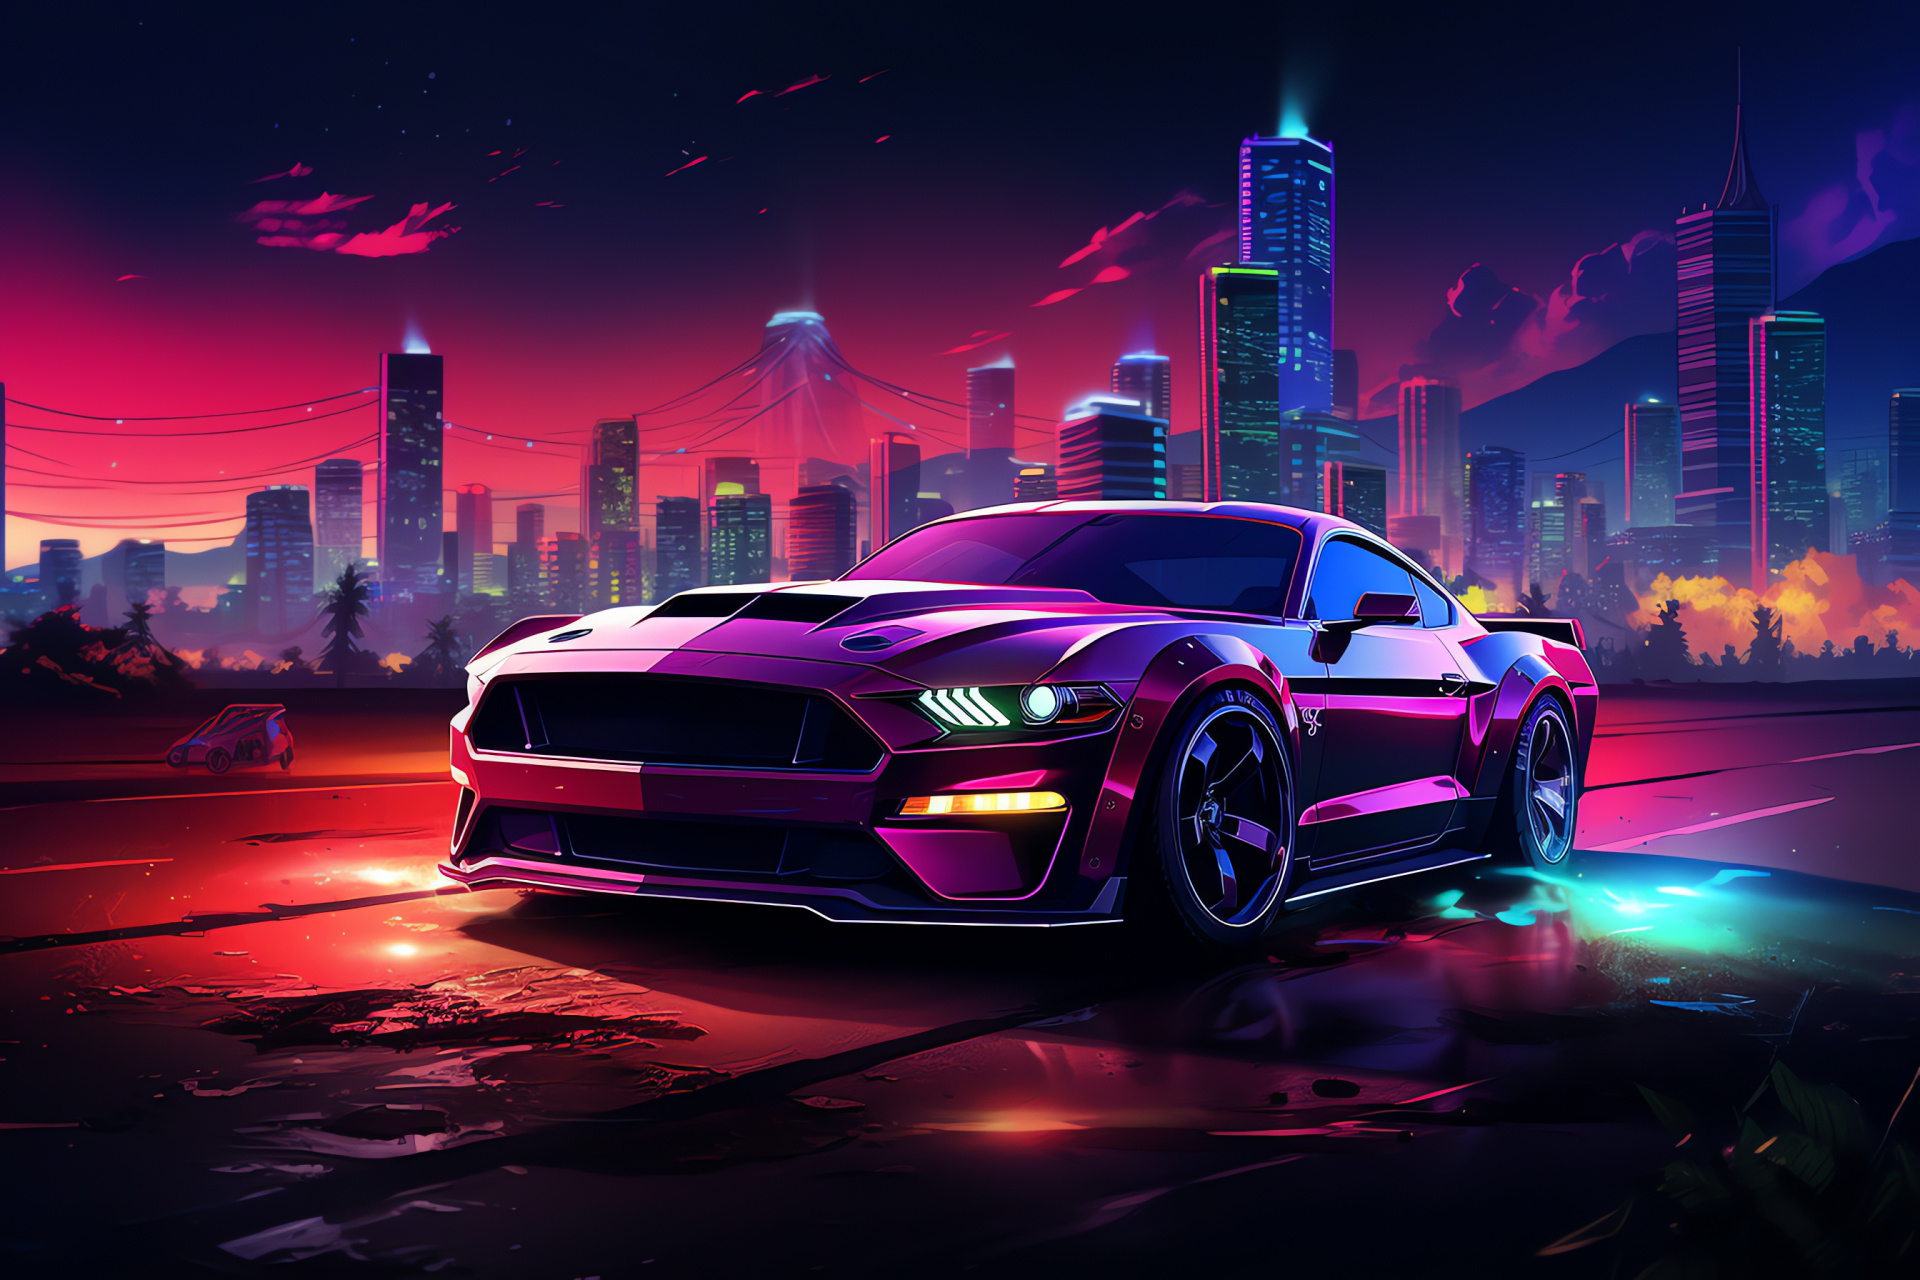 Muscle car saga, Mustang panorama, neon city concept, automotive admiration, future metropolis depiction, HD Desktop Wallpaper